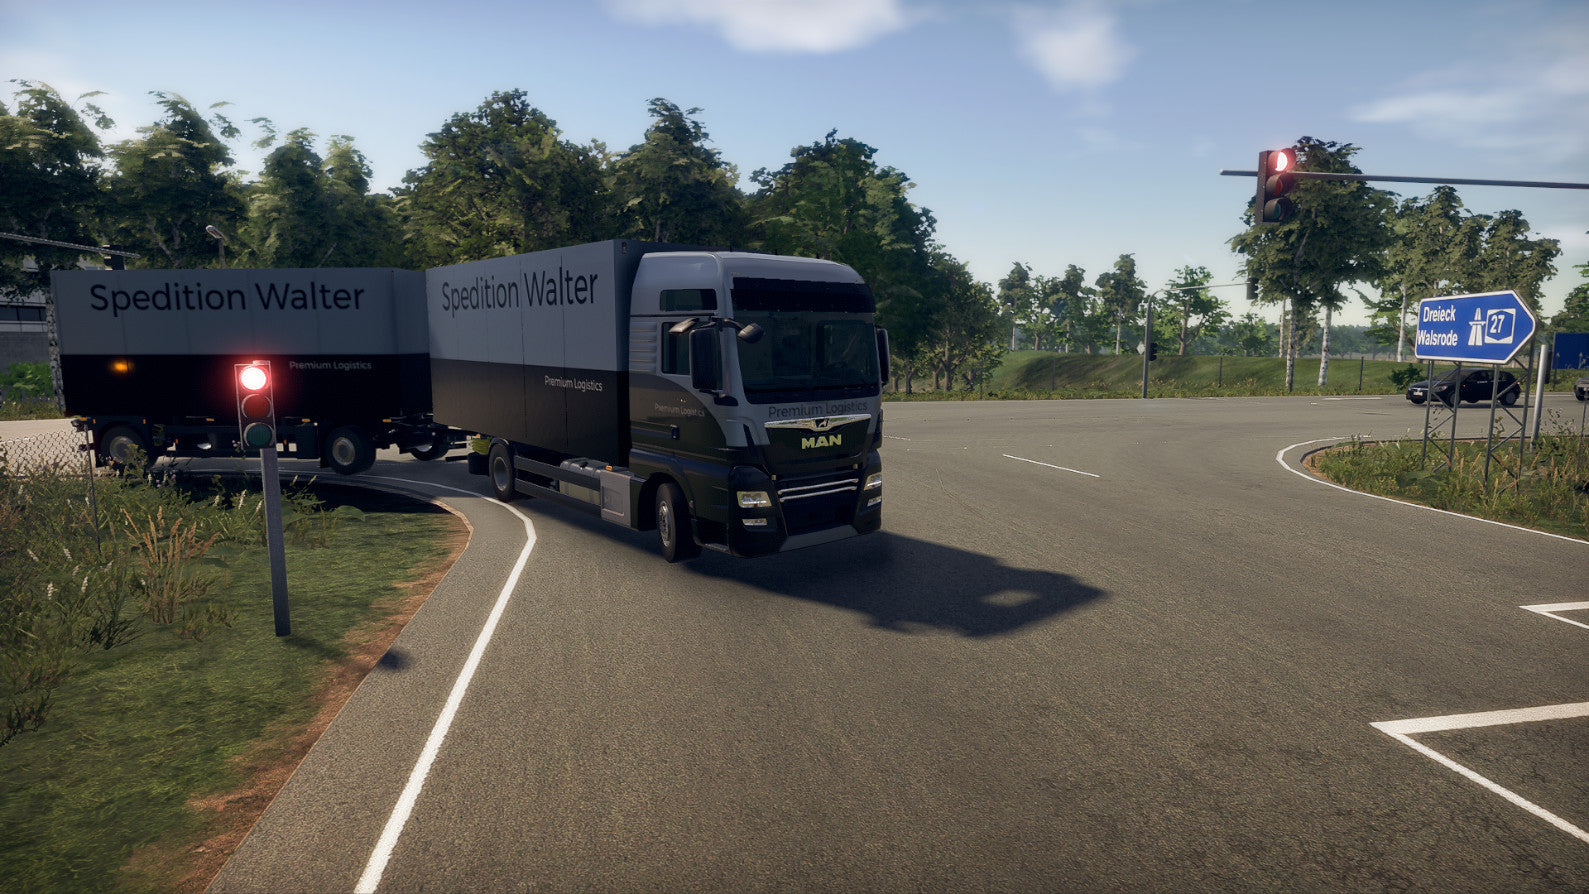 On The Road Truck Simulator PS4 Neu